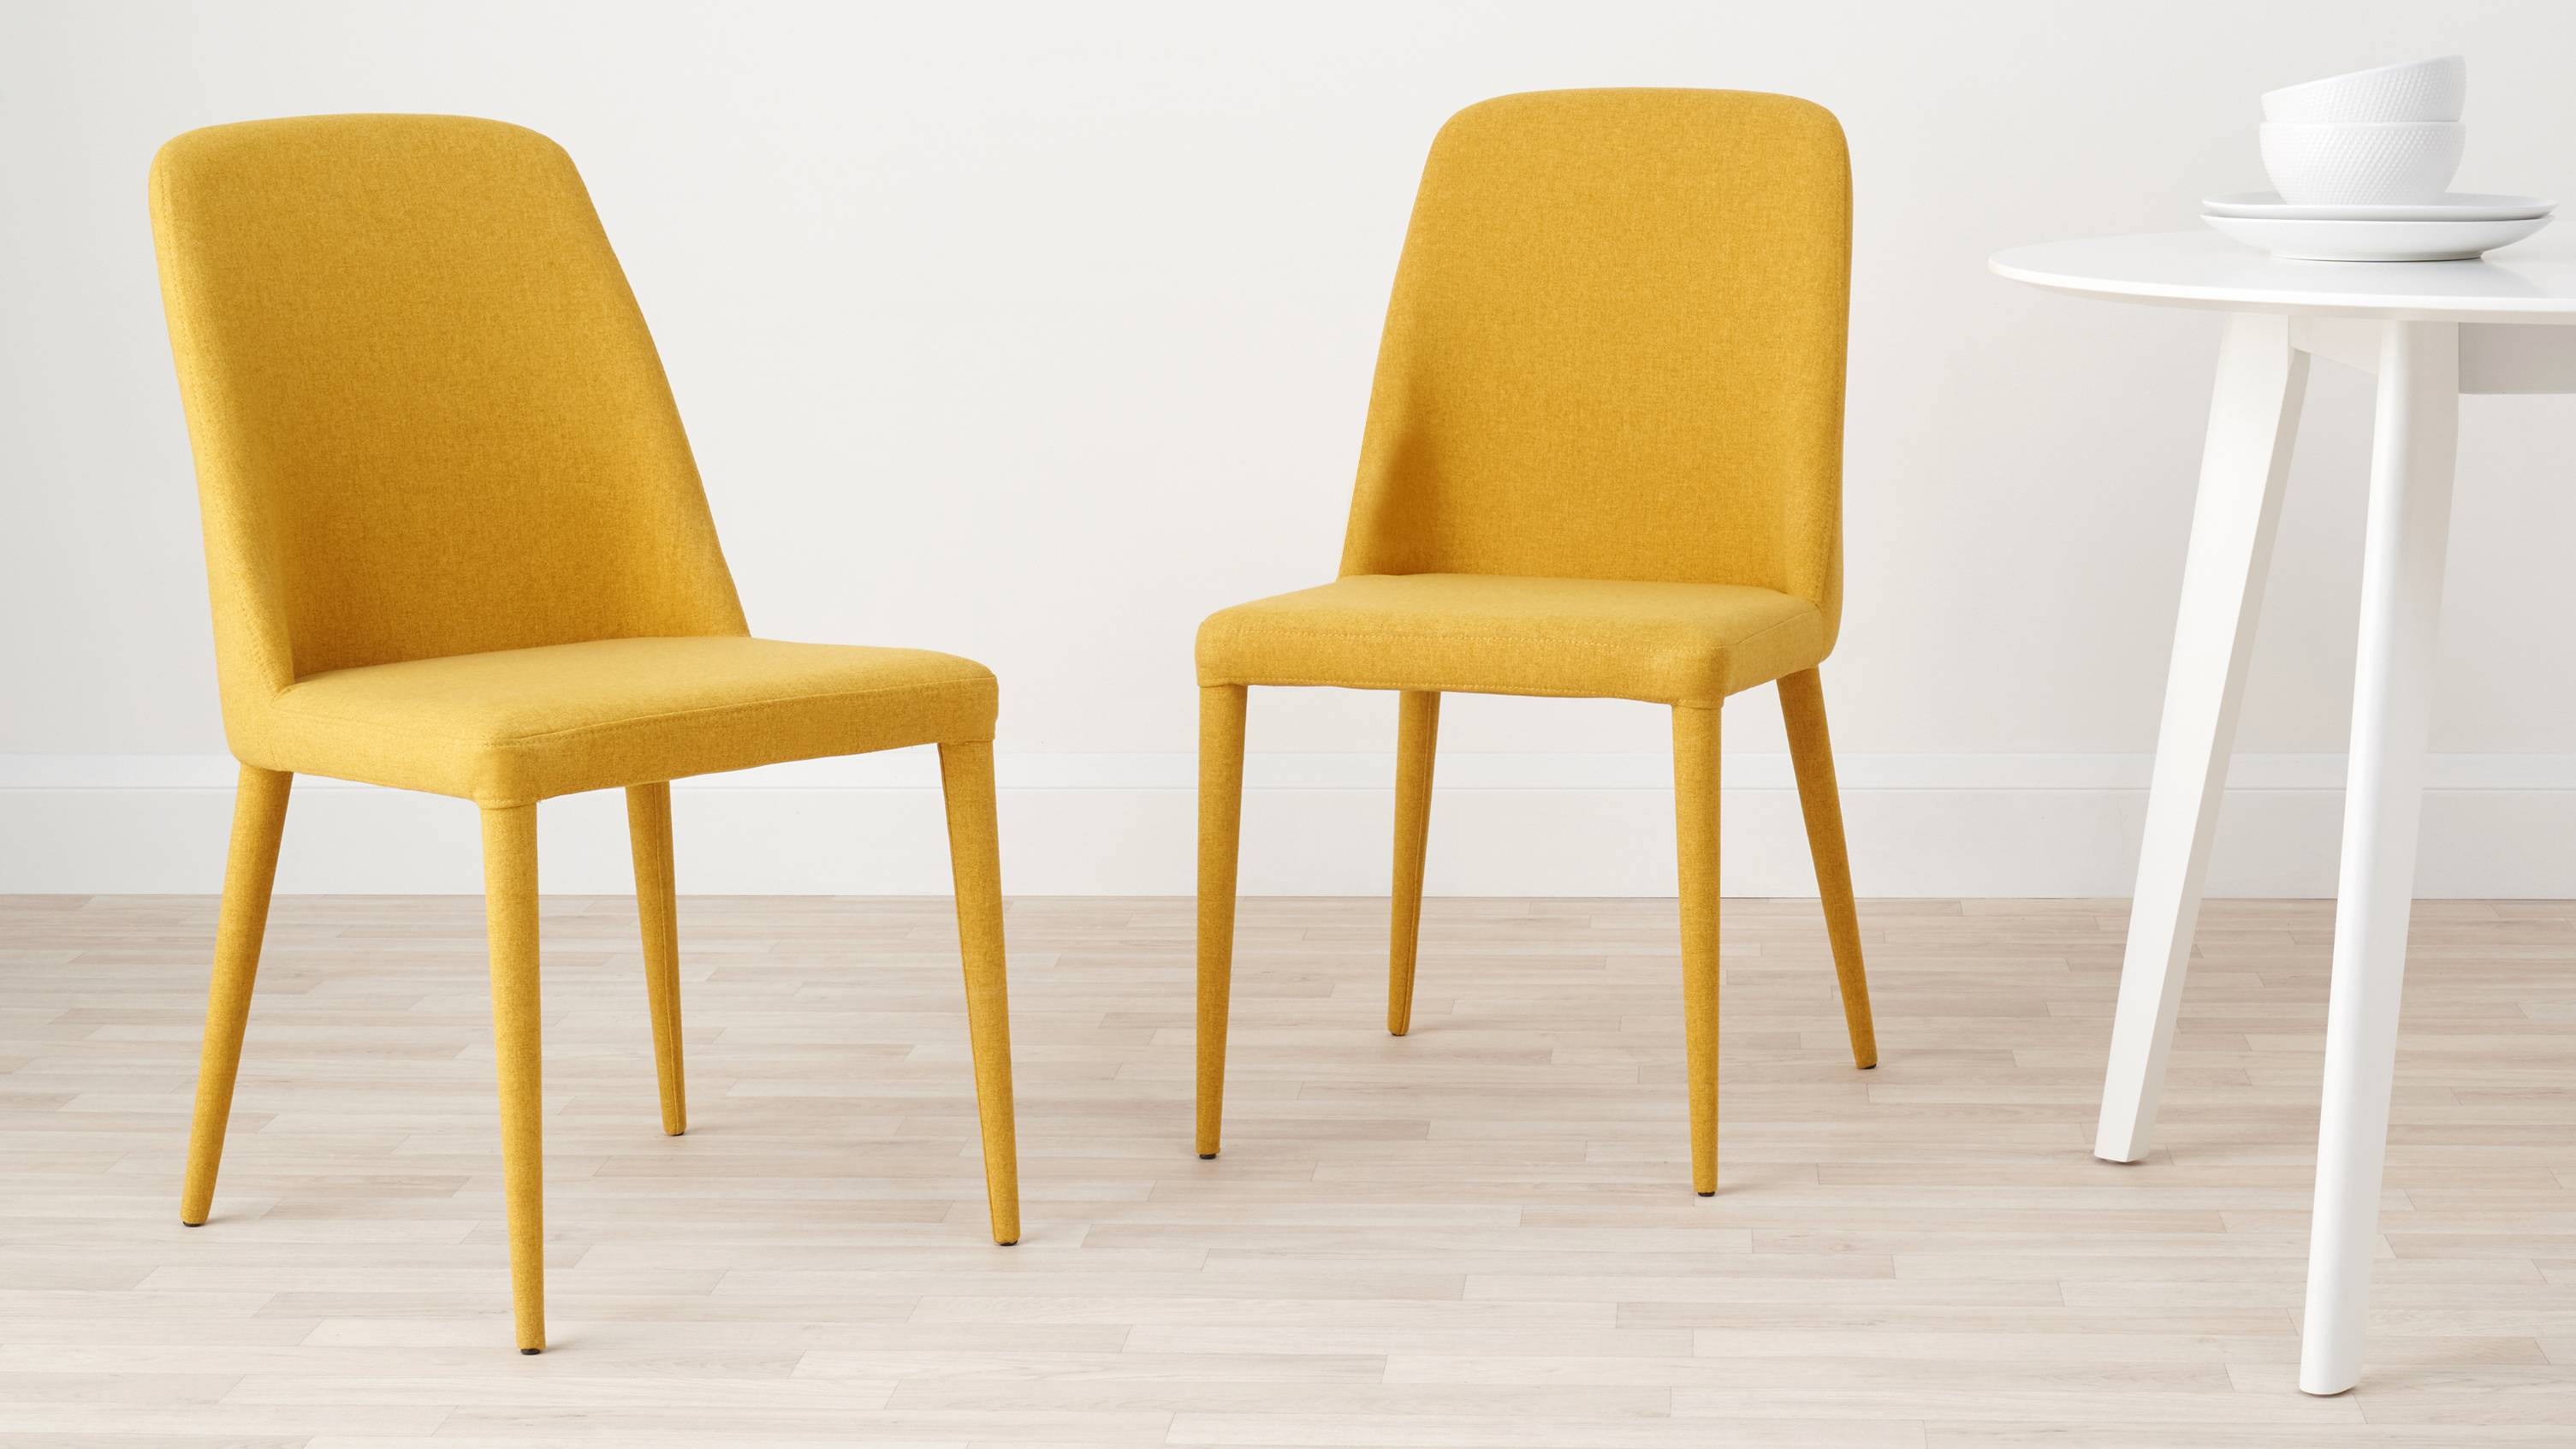 Mustard yellow fabric dining chair